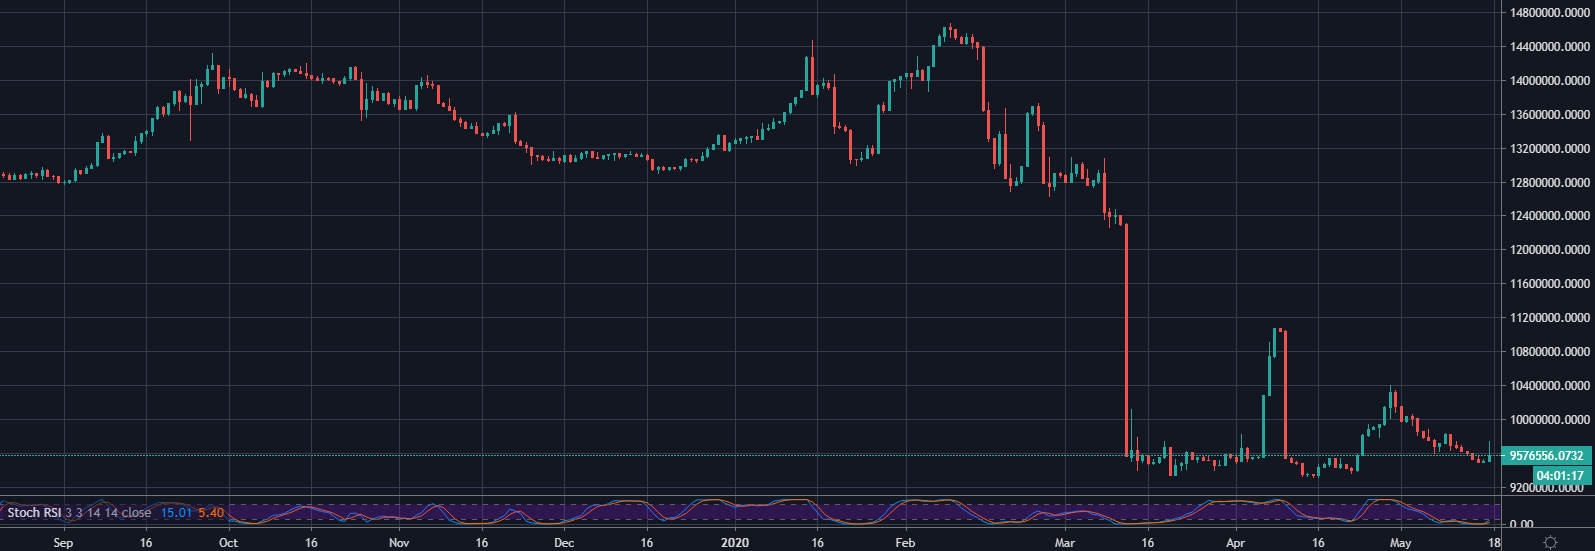 Bitfinex EOS/USD Longs 1D September 2019 - May 2020: TradingView​​​​​​​